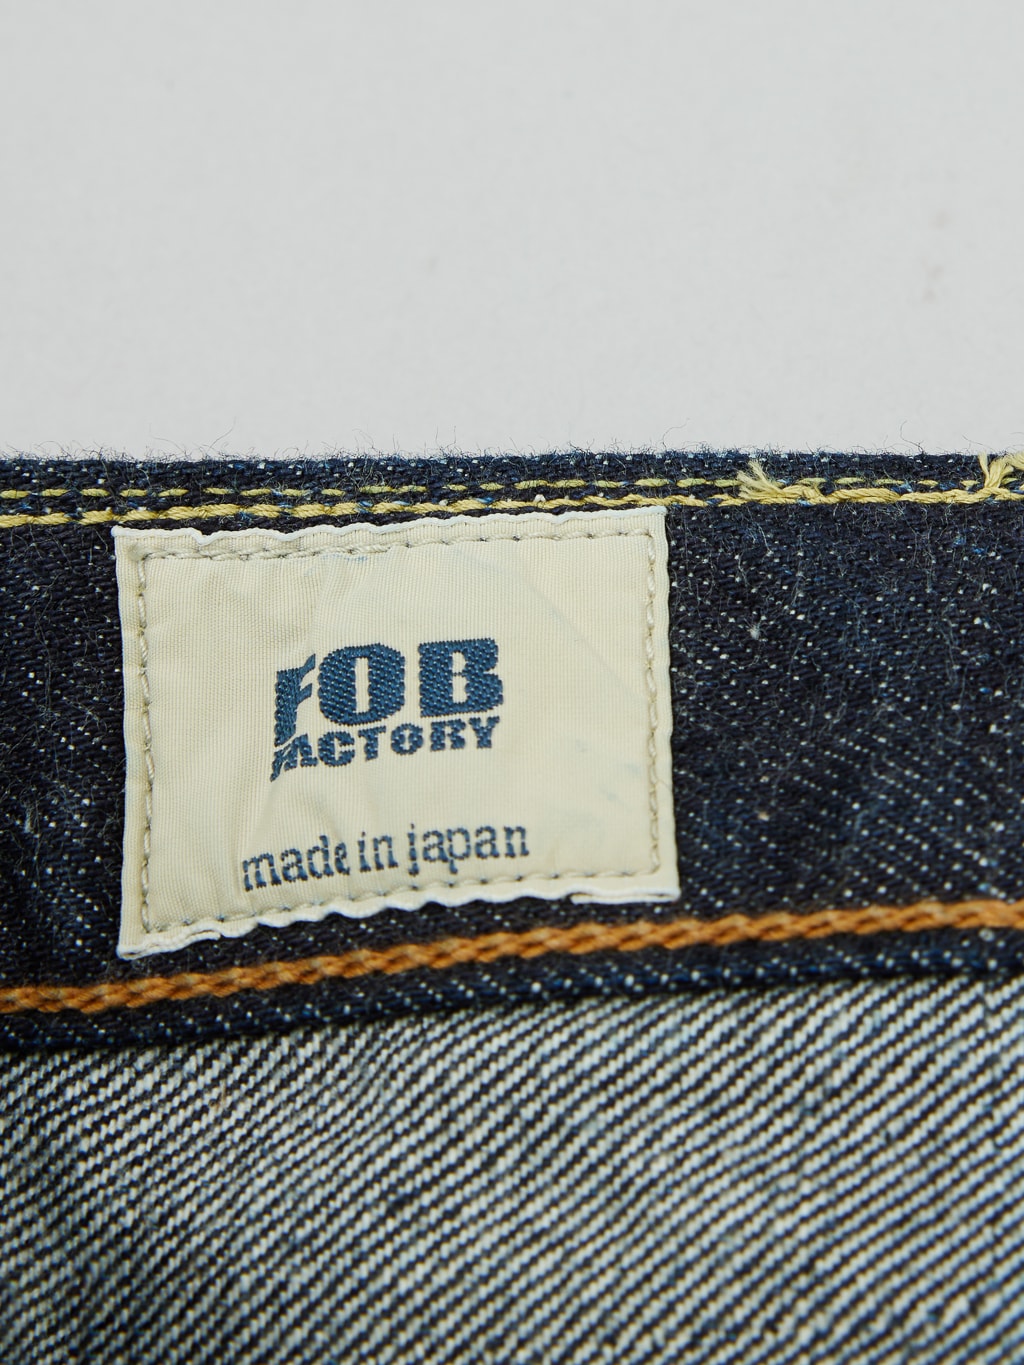 Fob factory slim straight denim jeans brand tag